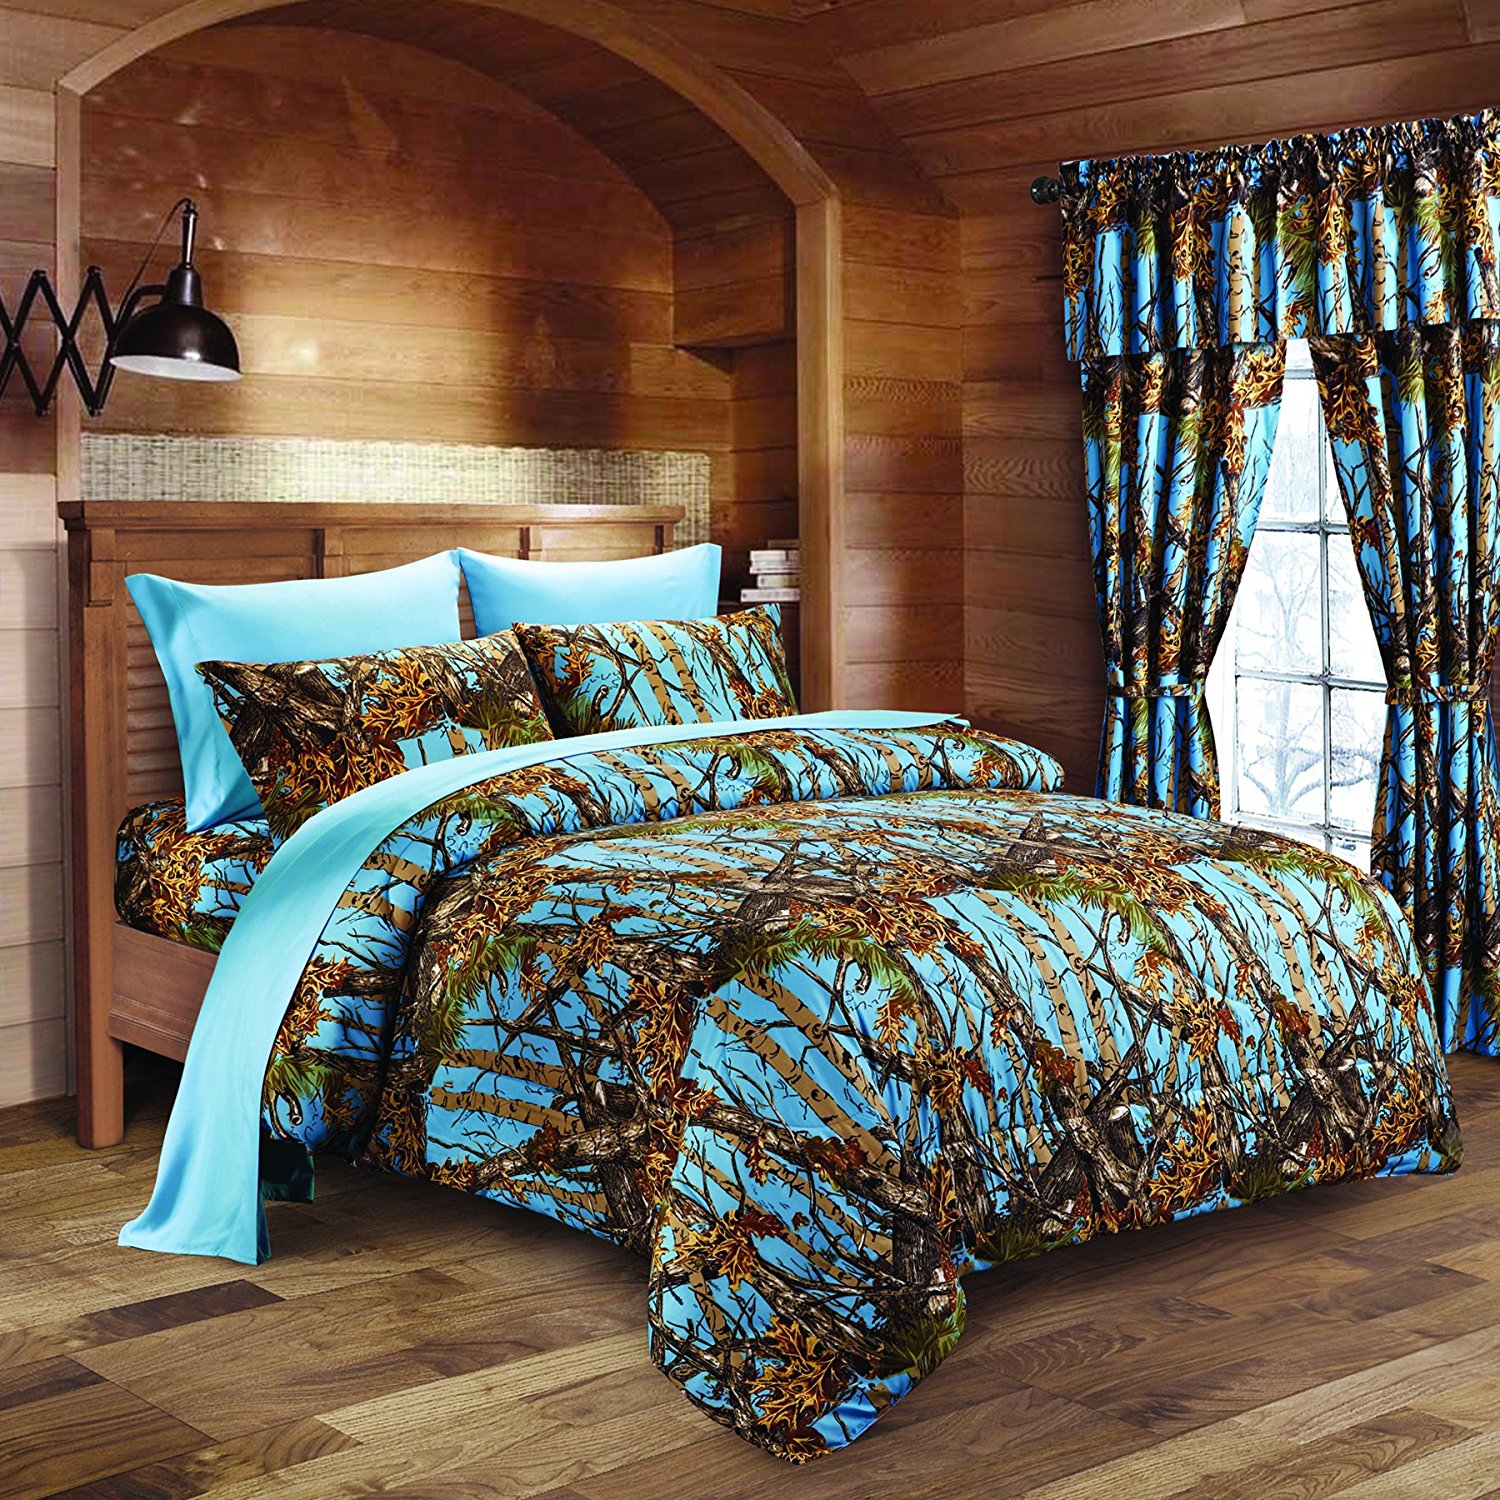 20 Lakes Luxurious Microfiber Powder Blue Camo Comforter & Sheet Set Bed in a Bag - Queen